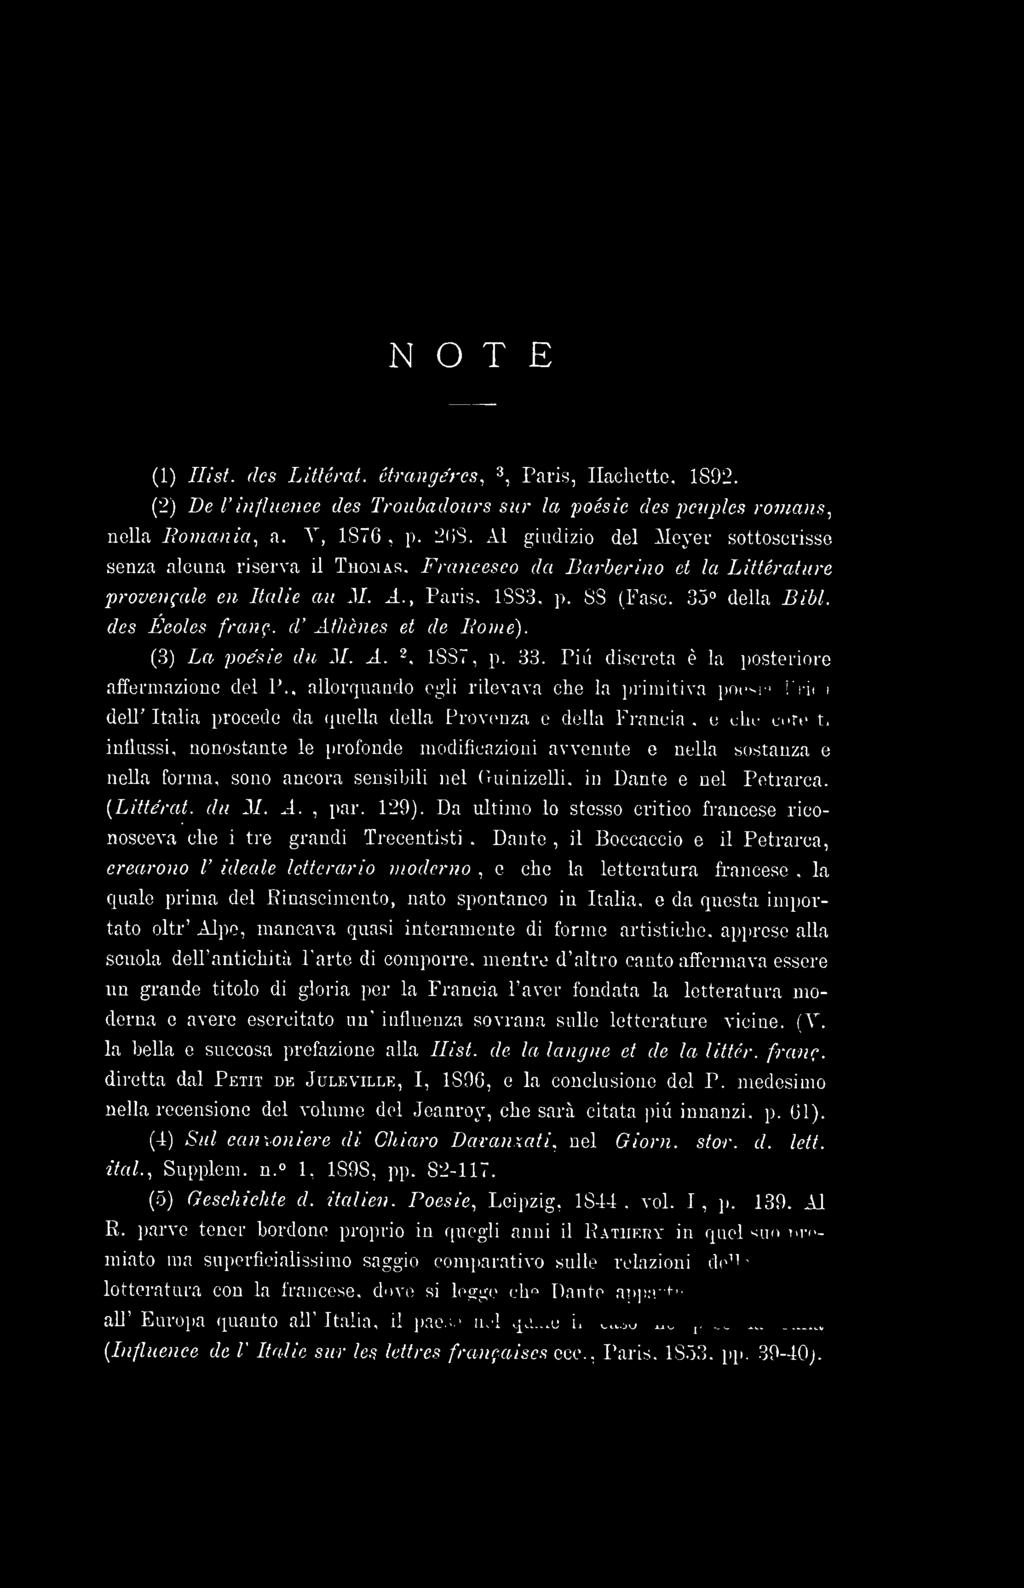 d' Afhènes et de Fonie). (3) La poesie du M. A. 2 1887 p. 33. Piti discreta è la posteriore affermazione del P.